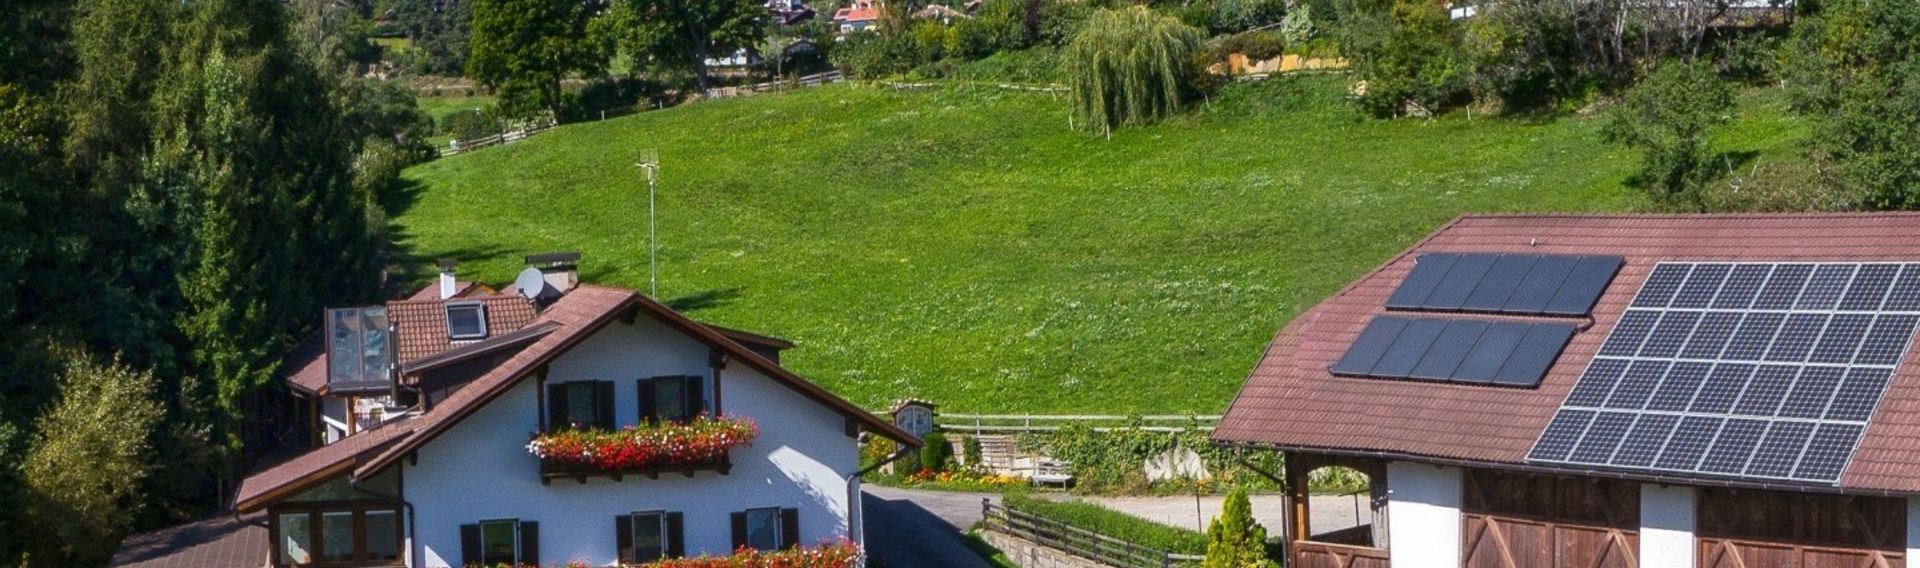 Urlaub Südtirol Bauernhof – Moosbachhof